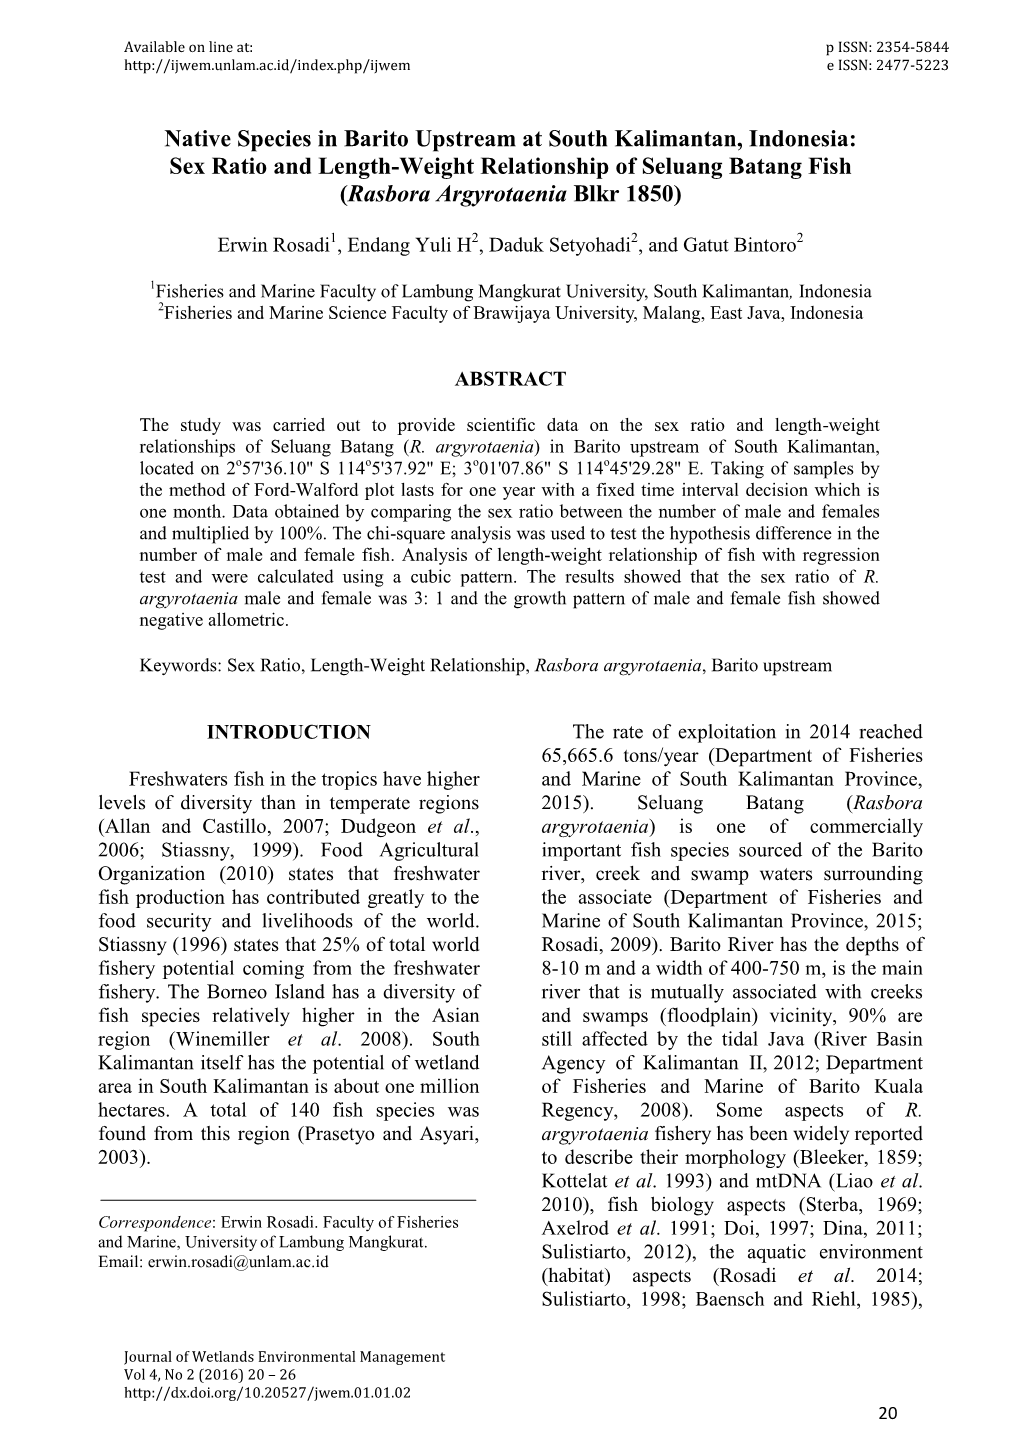 Sex Ratio and Length-Weight Relationship of Seluang Batang Fish (Rasbora Argyrotaenia Blkr 1850)